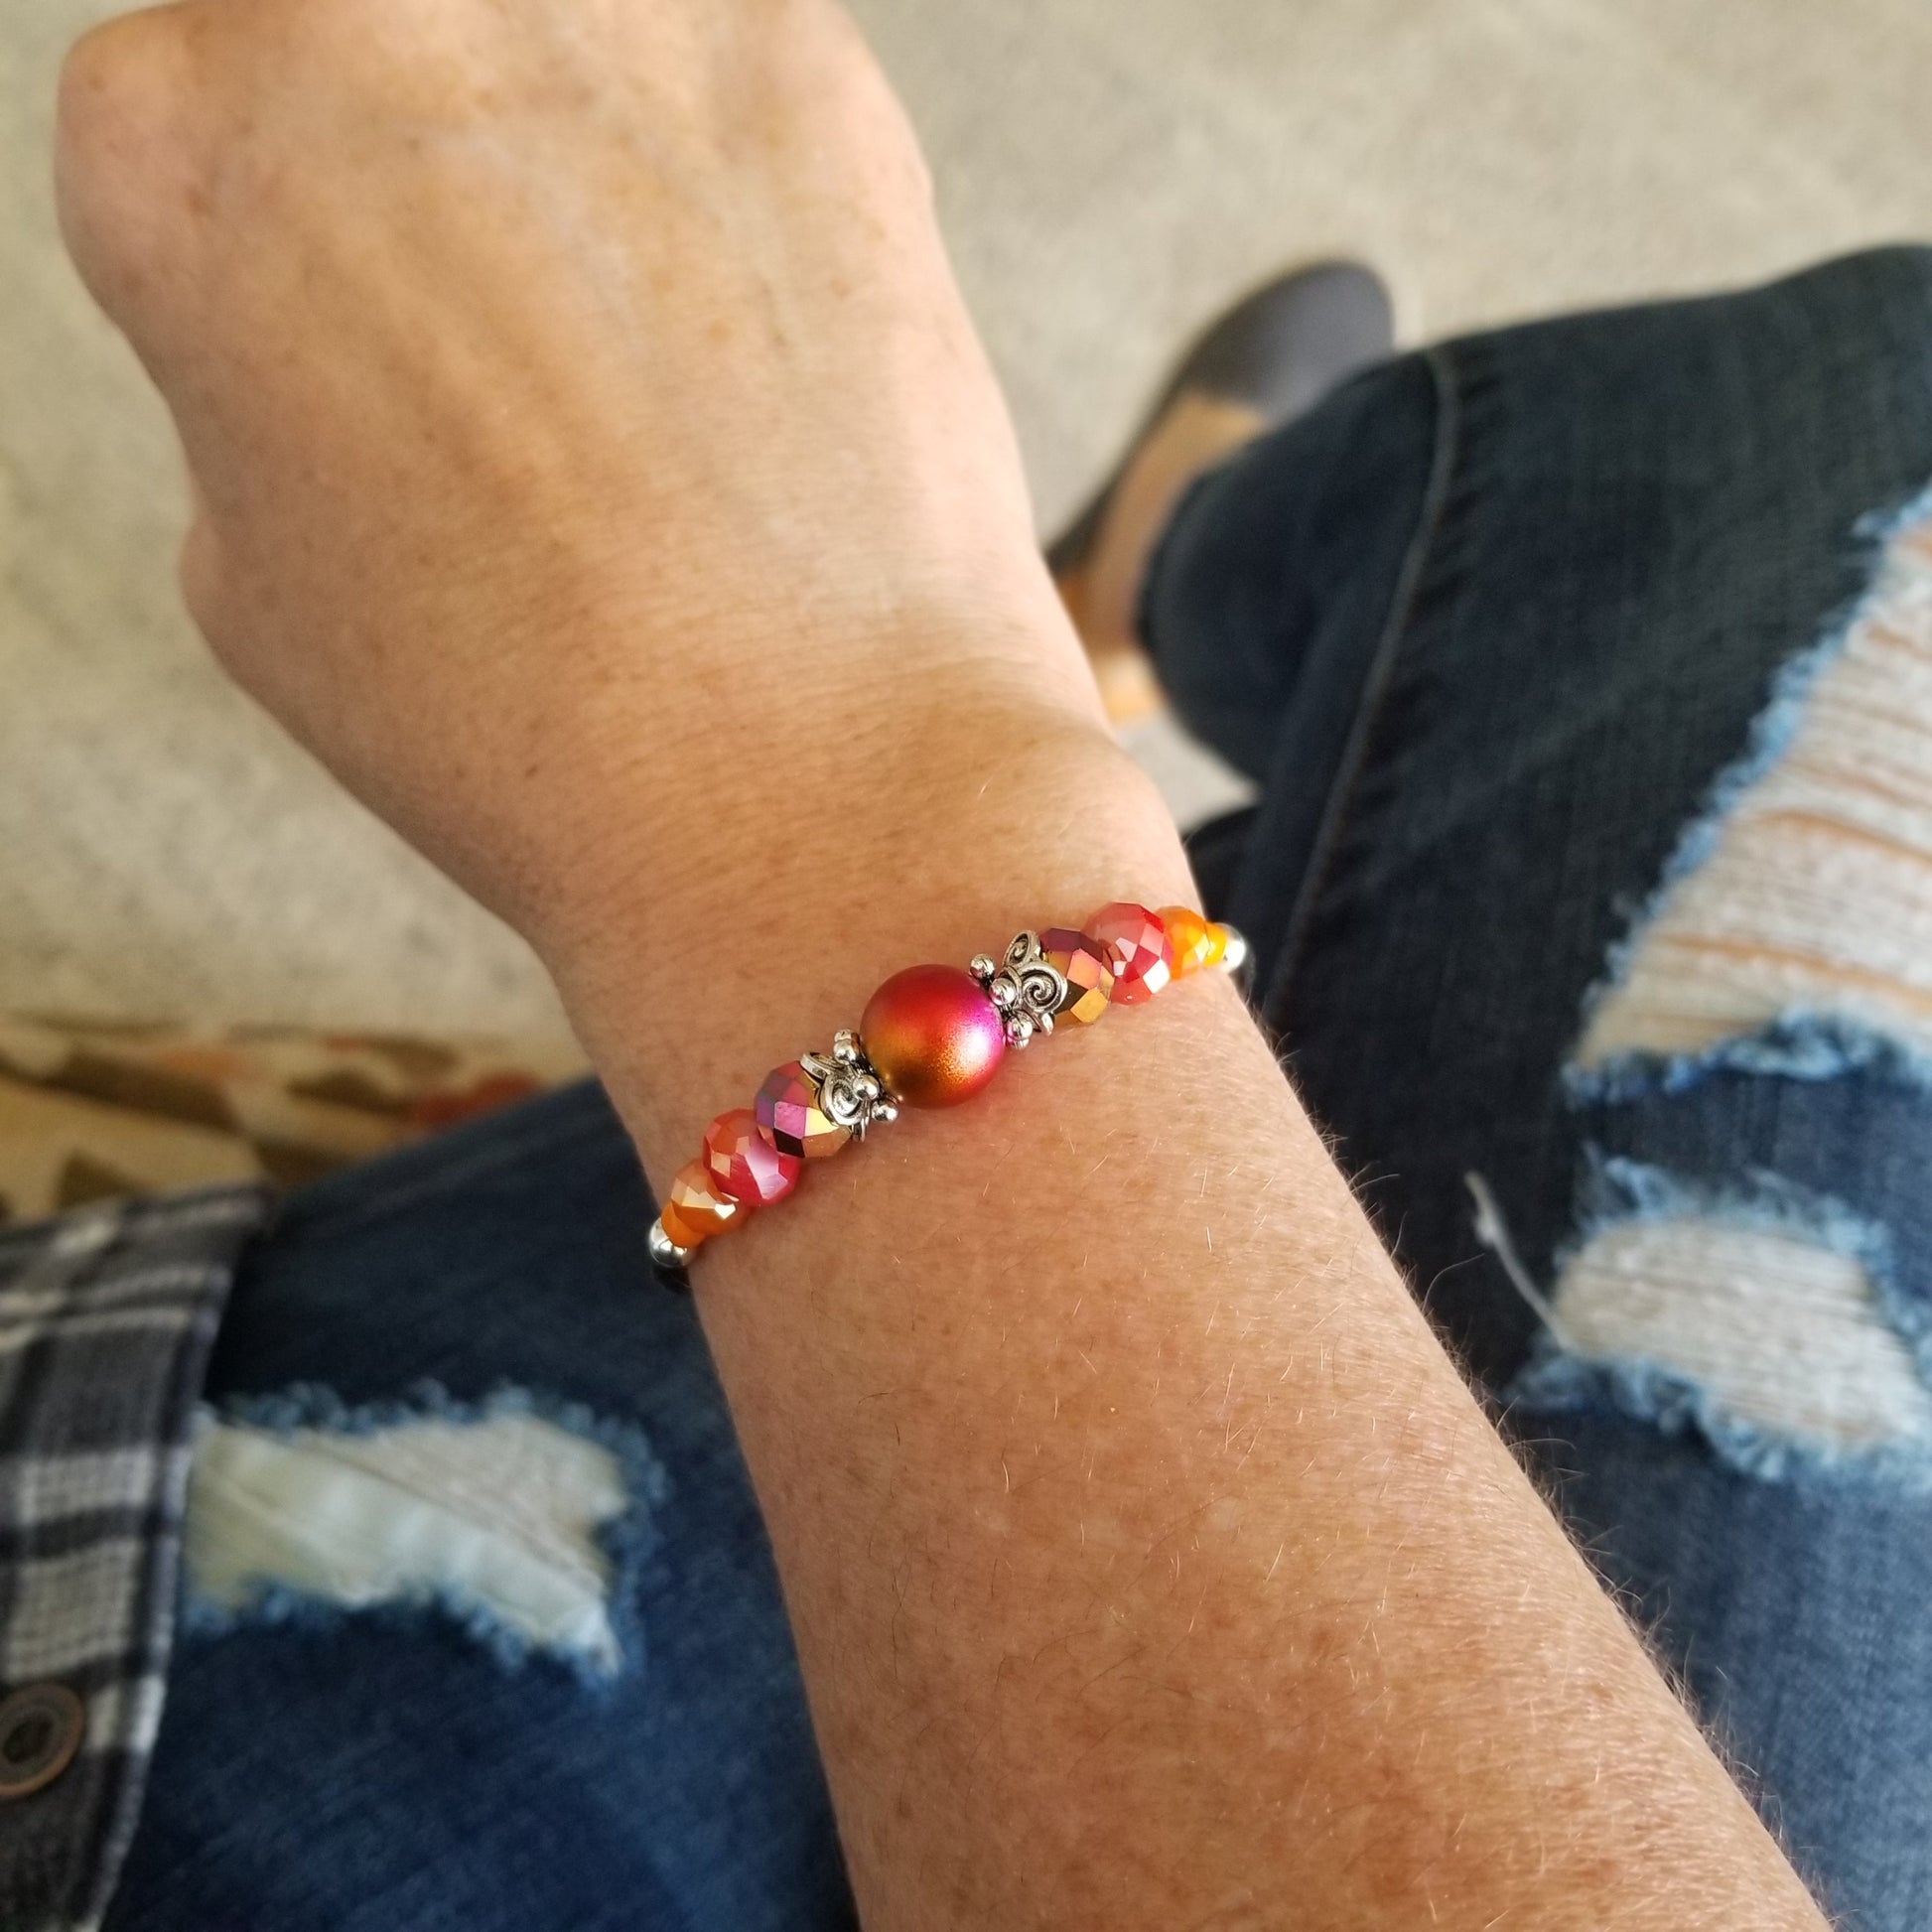 Iridescent Fire Orange glass bead with coordinating glass beads wrap bracelet on wrist